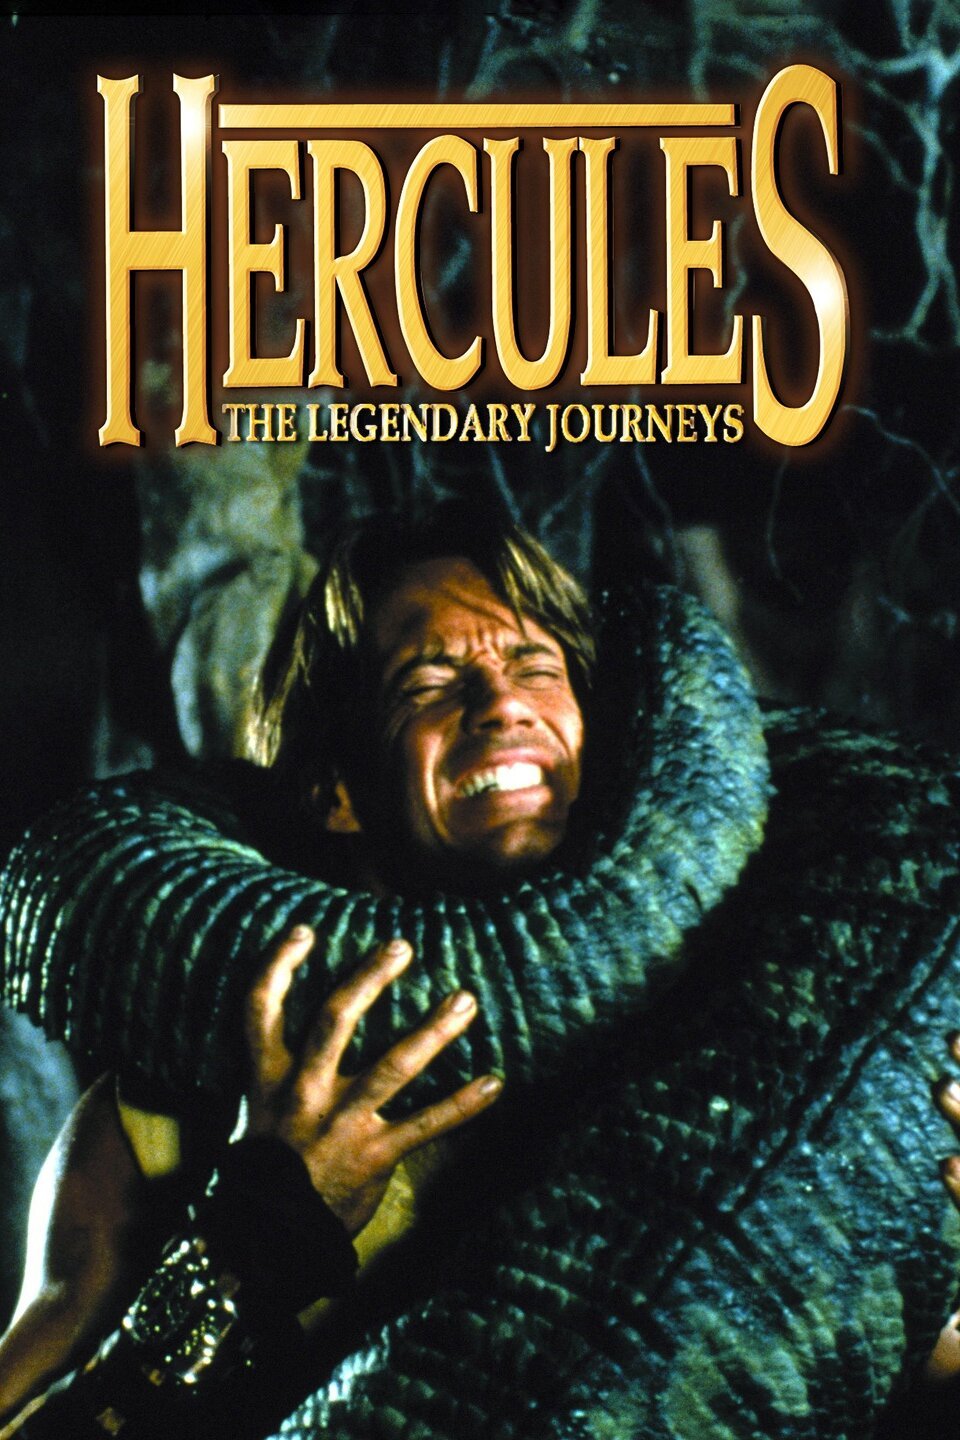 hercules the legendary journeys vudu